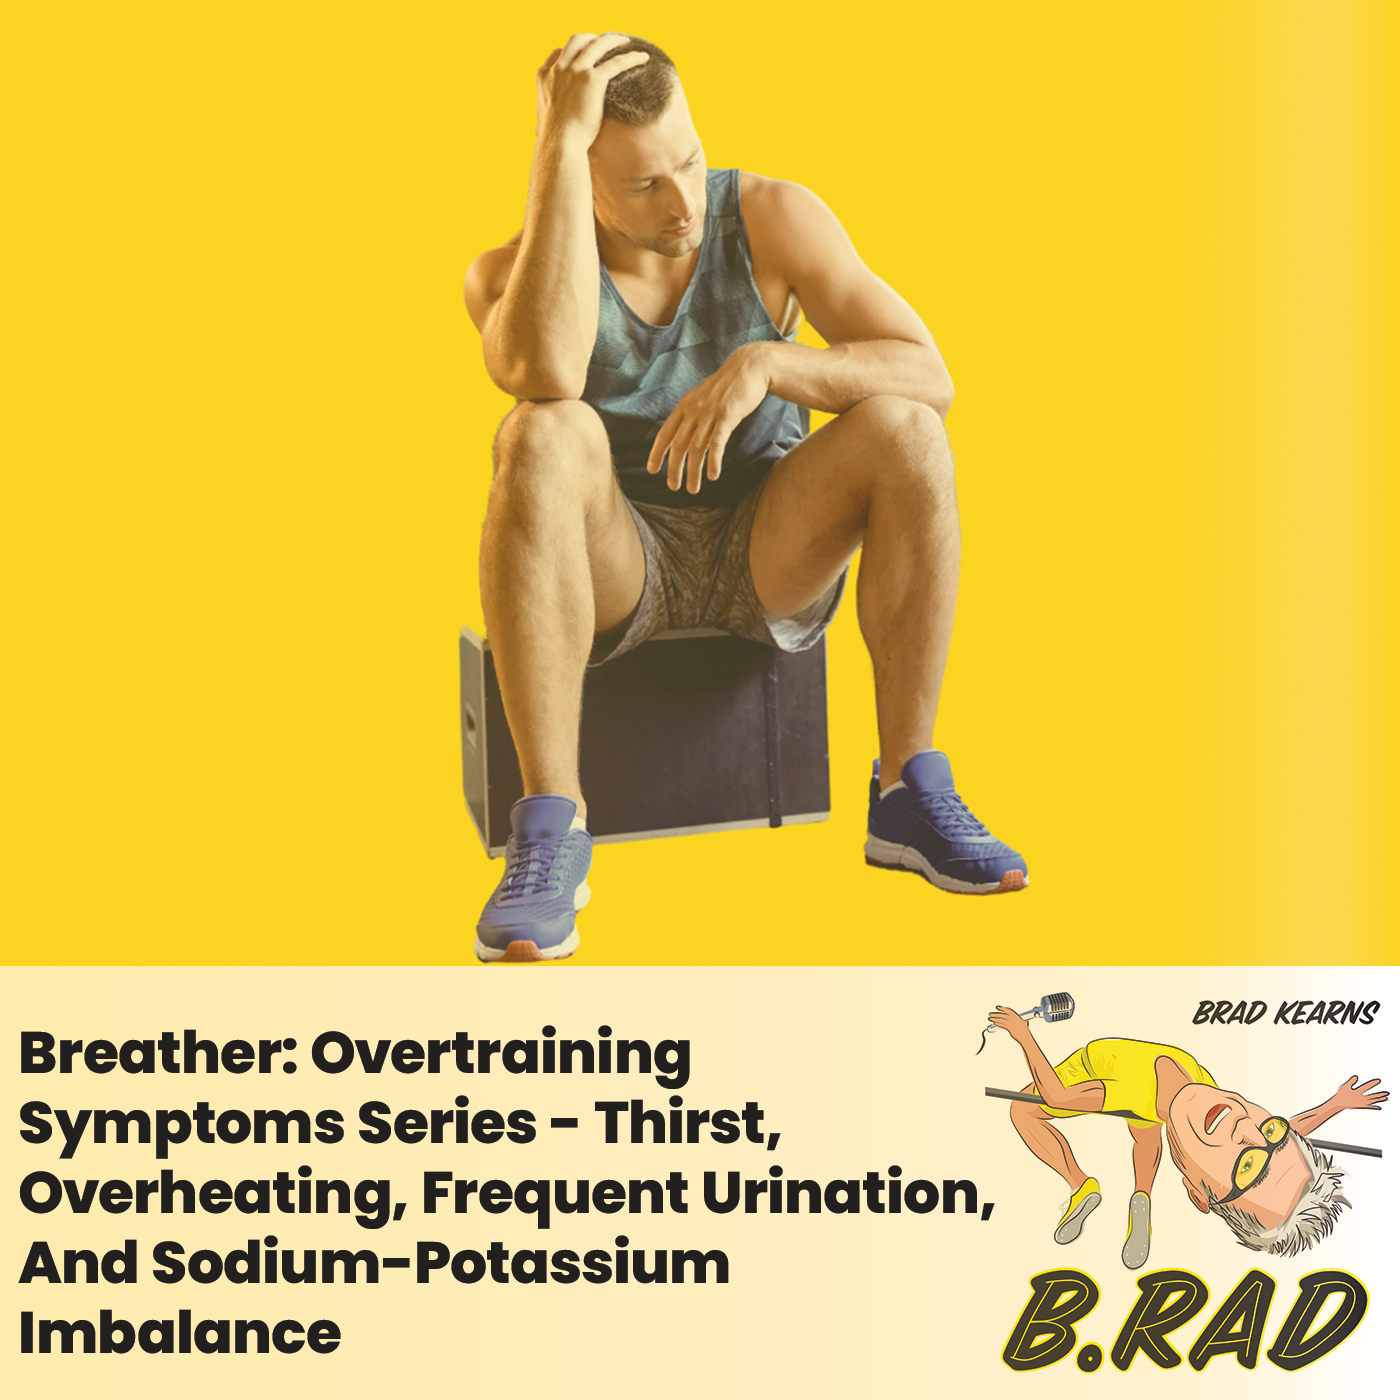 Breather: Overtraining Symptoms Series - Thirst, Overheating, Frequent Urination, And Sodium-Potassium Imbalance